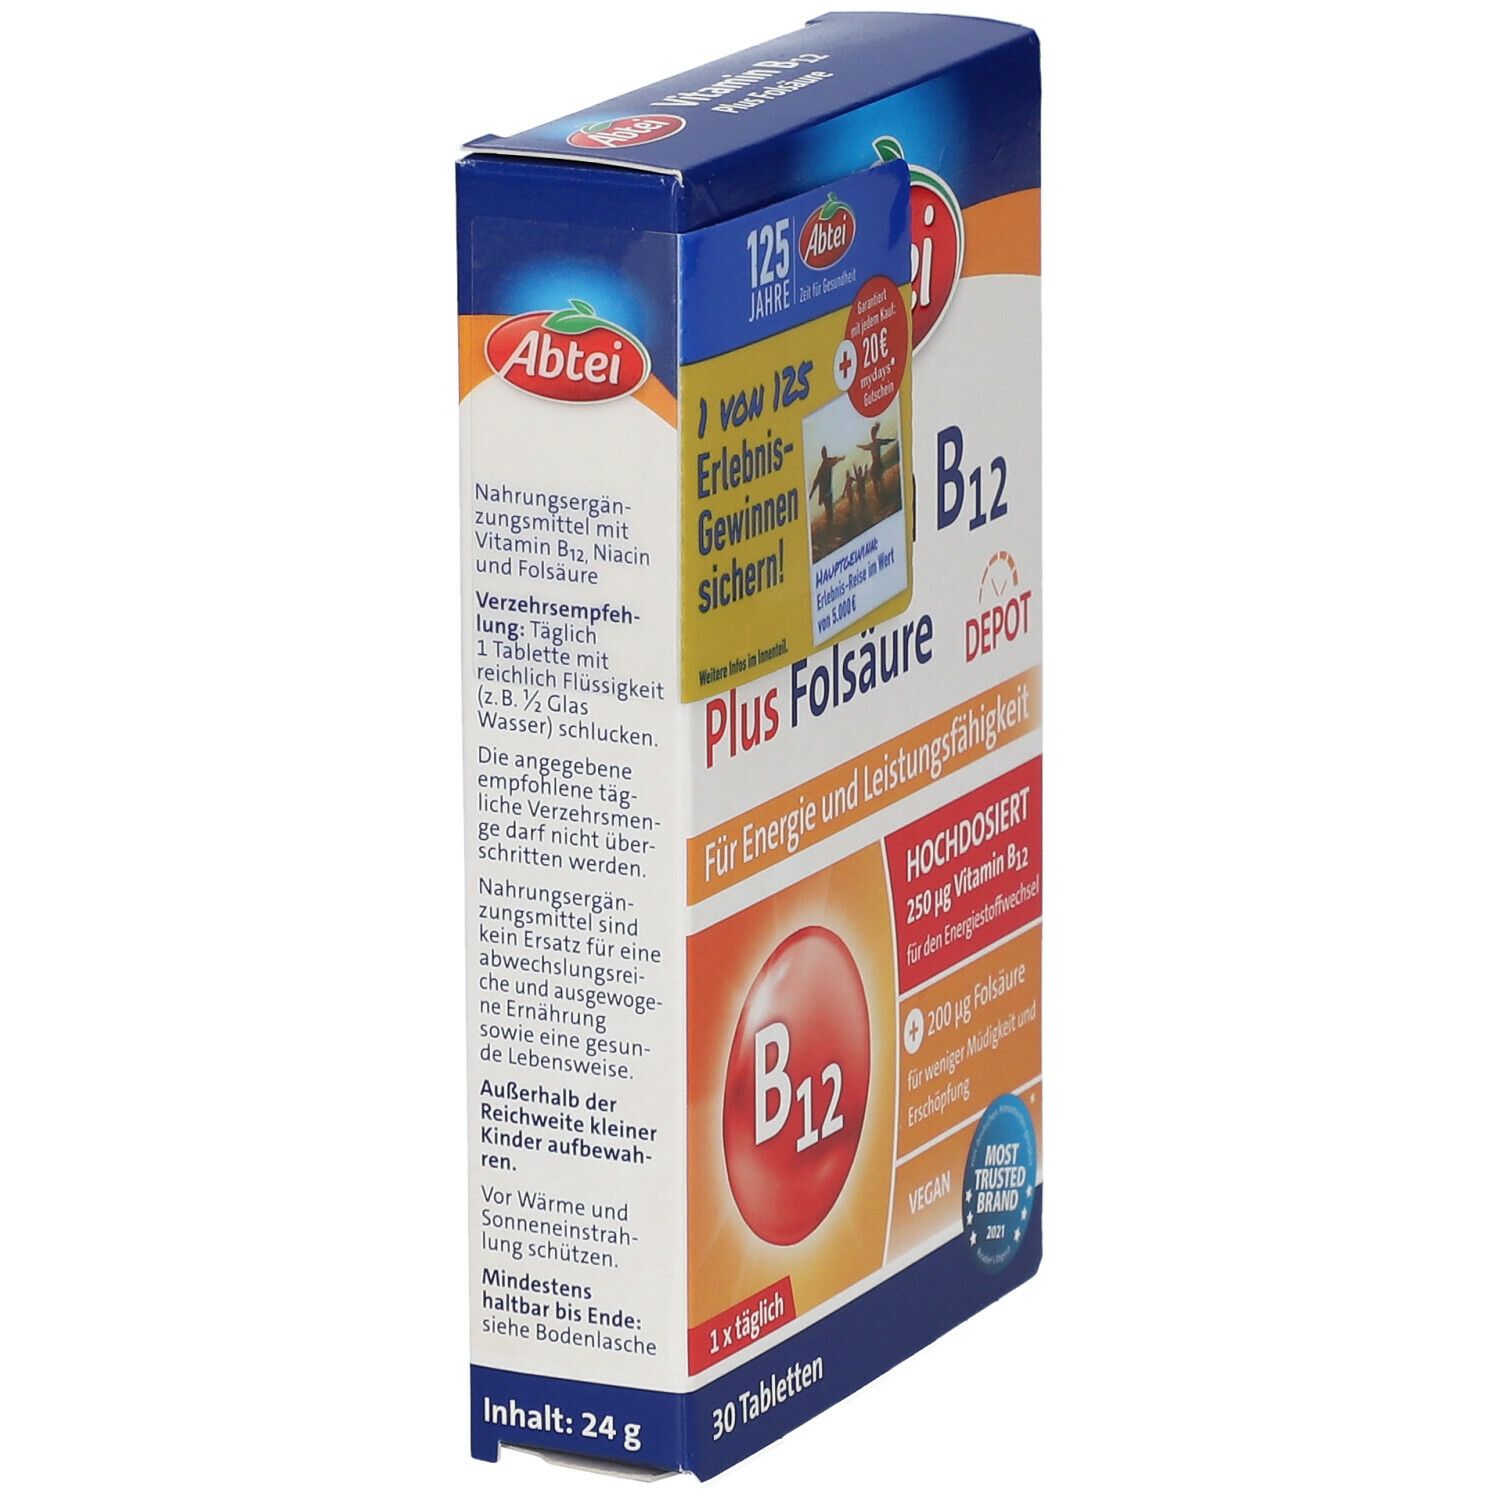 Abtei Vitamin B12 Plus